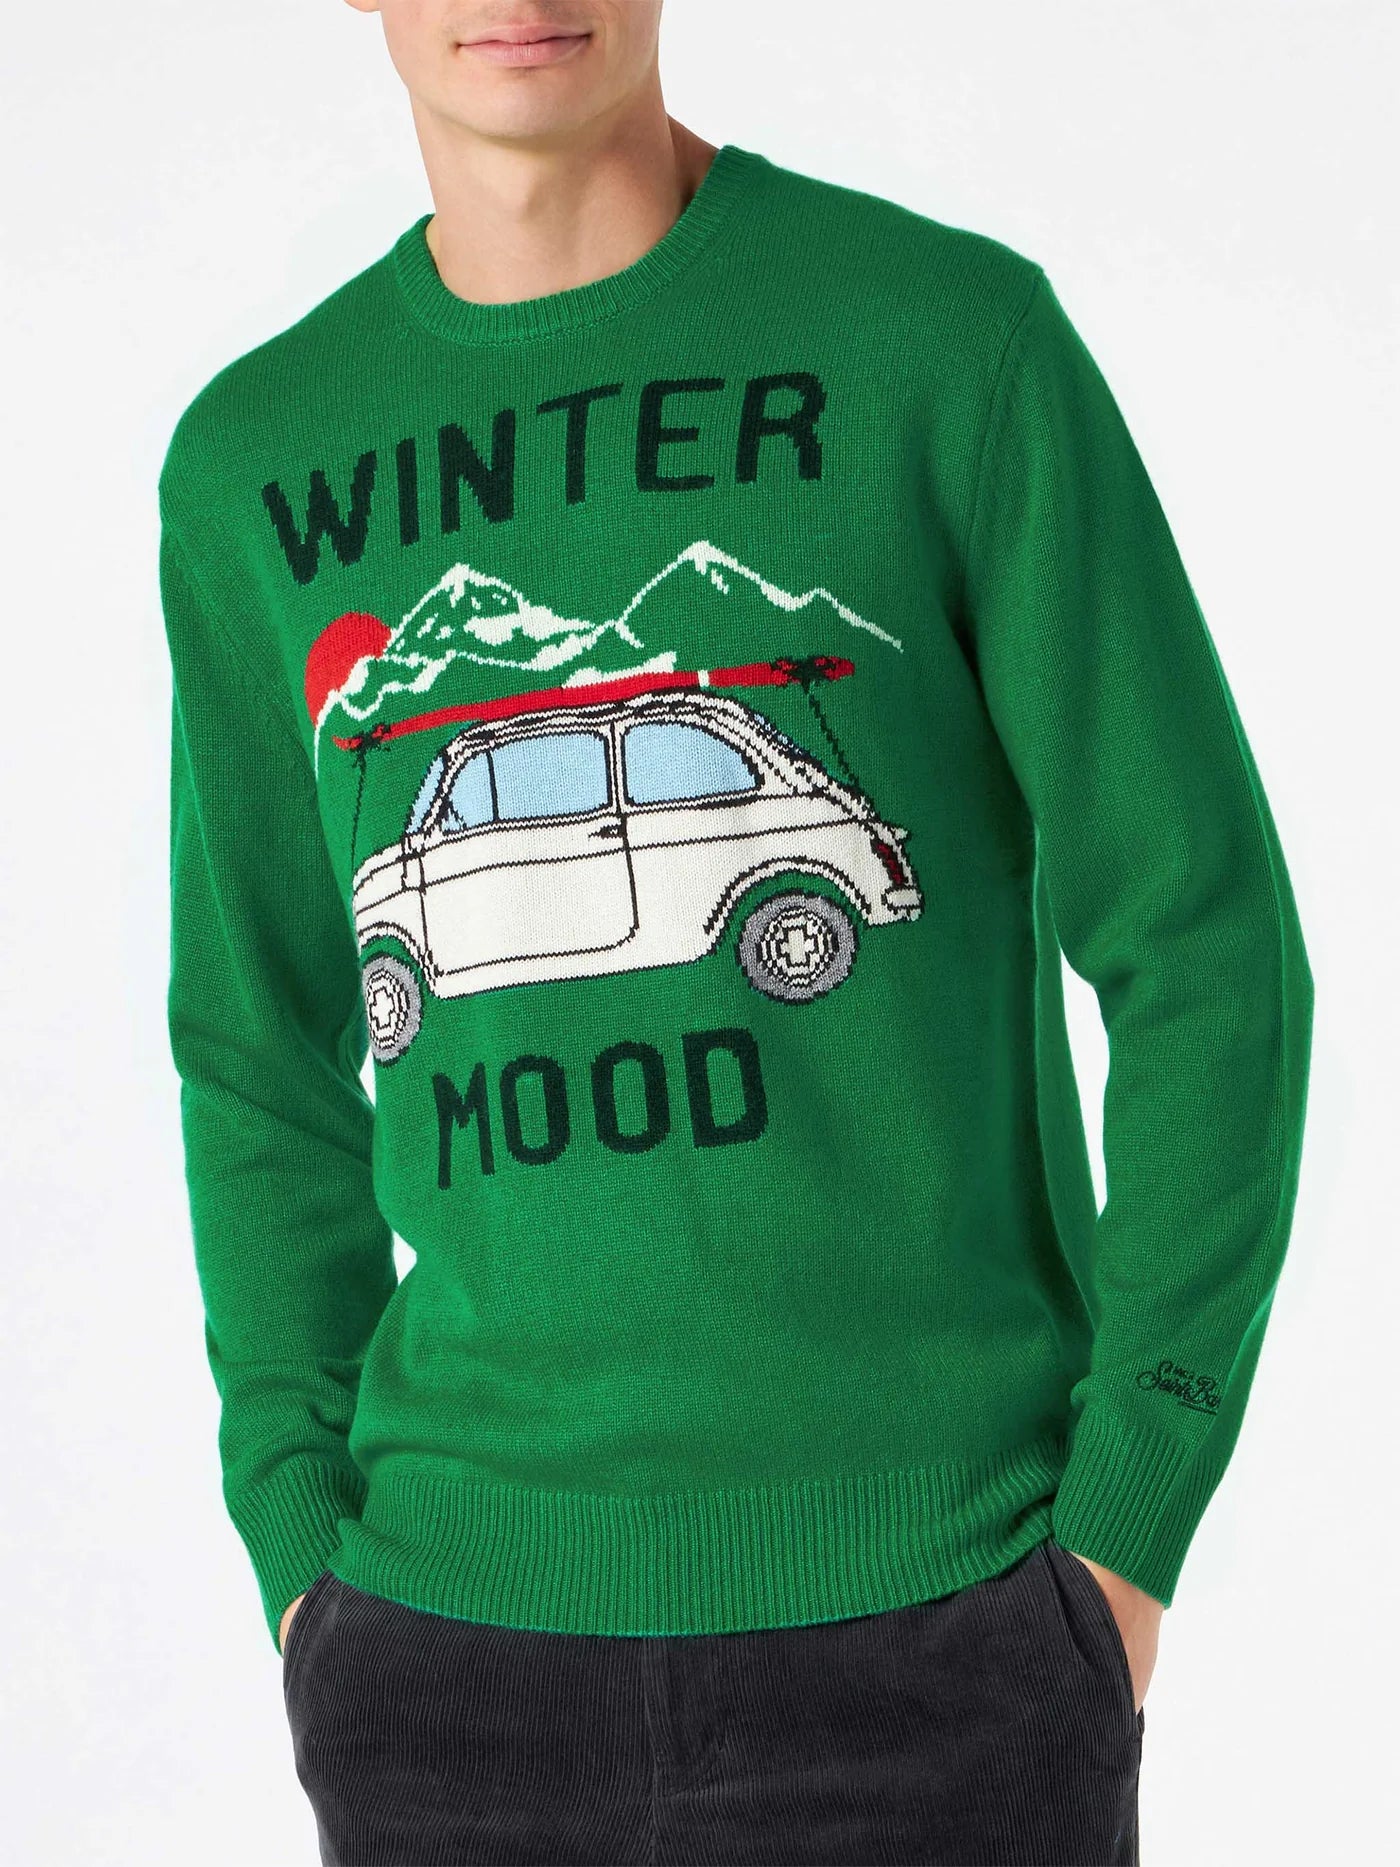 Мъжки пуловер car print winter mood